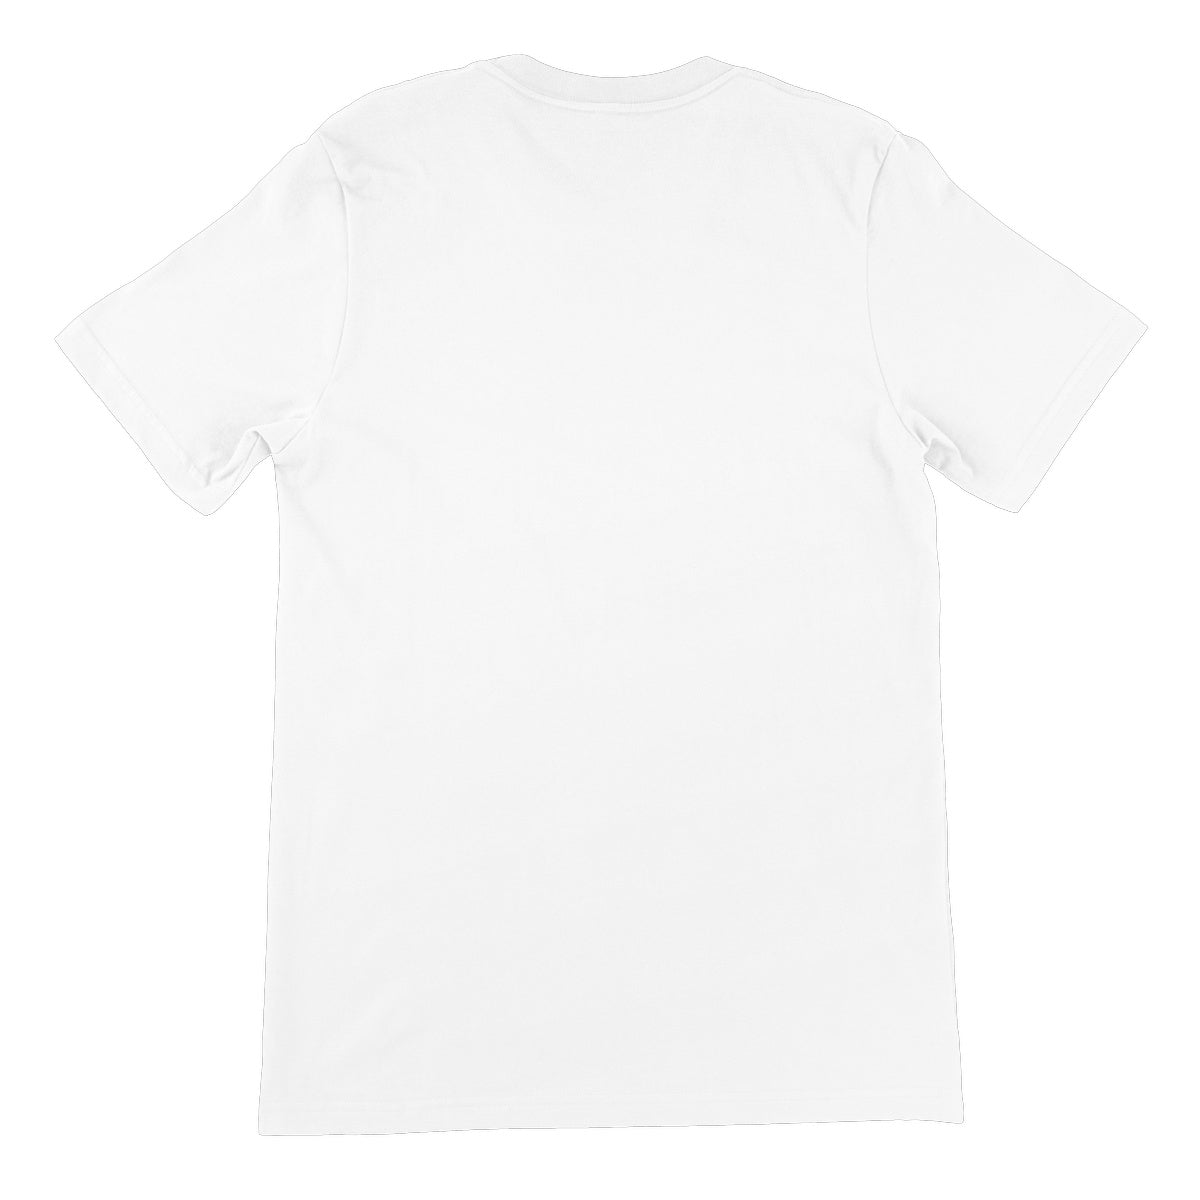 The Good Brothers 'Talk n Shop Unisex Short Sleeve T-Shirt